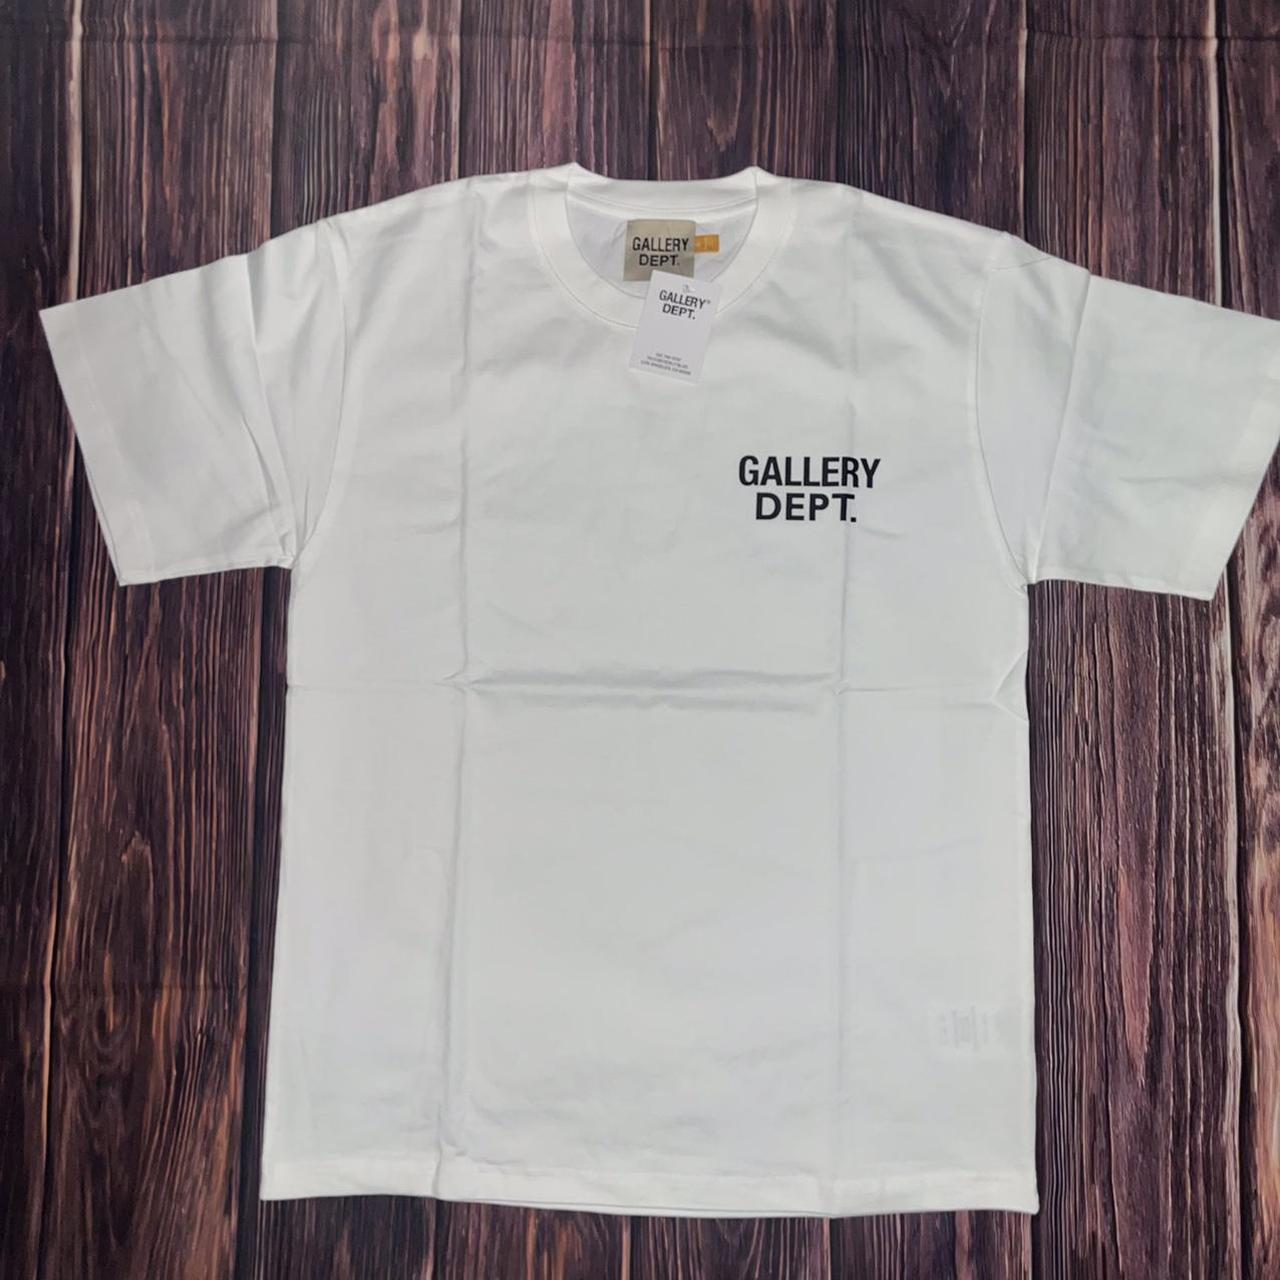 Gallery dept Shirt Gallery dept Tee Brand new with... - Depop